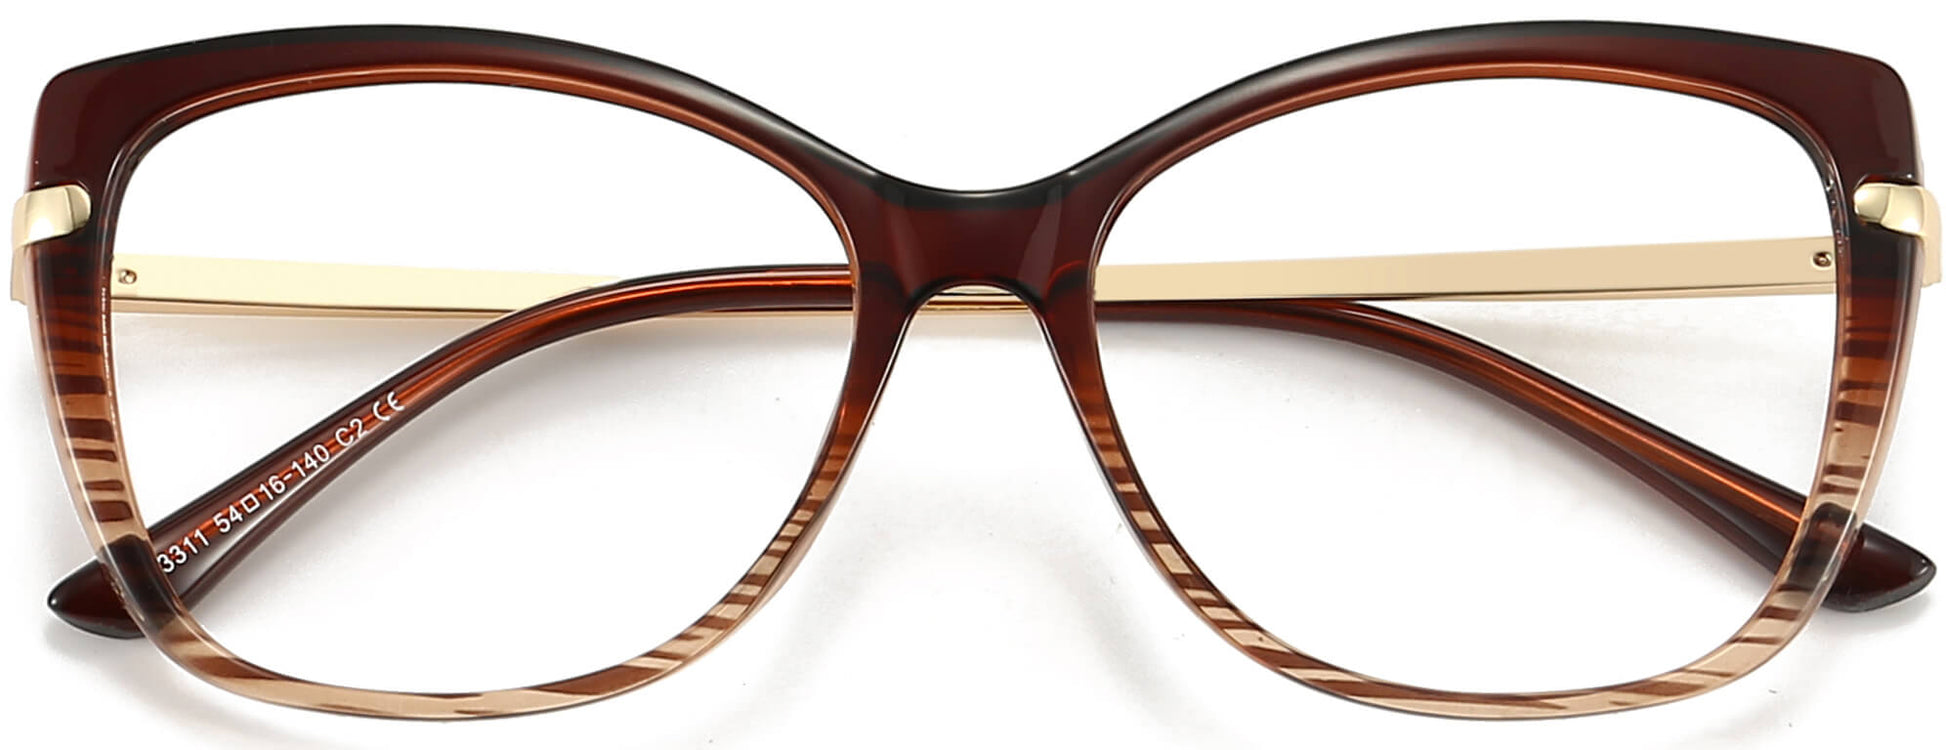 Kora Cateye Brown Eyeglasses from ANRRI, closed view